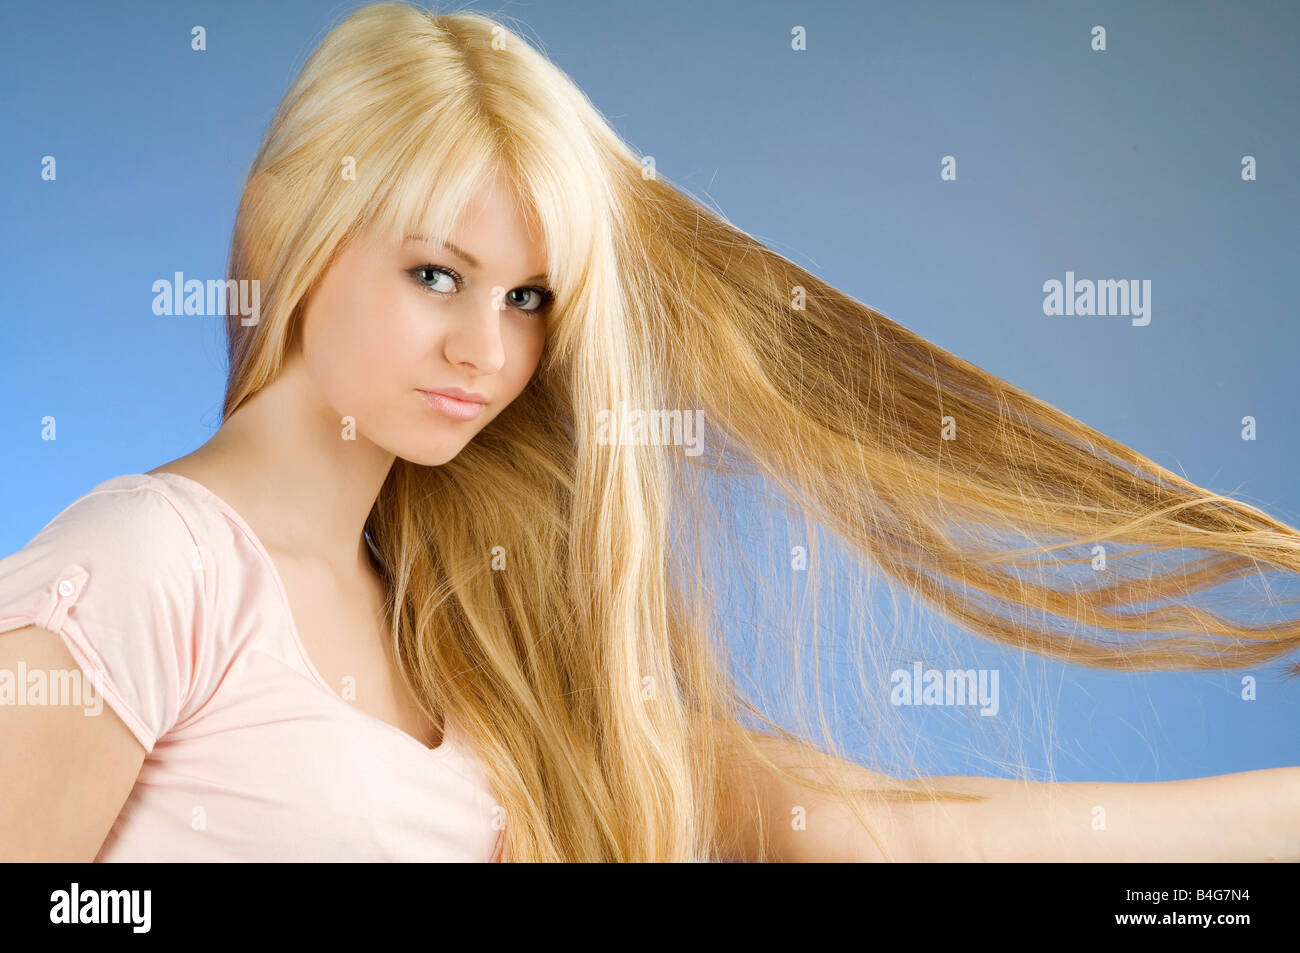 1. "Teenage girl with long blonde hair" - wide 2